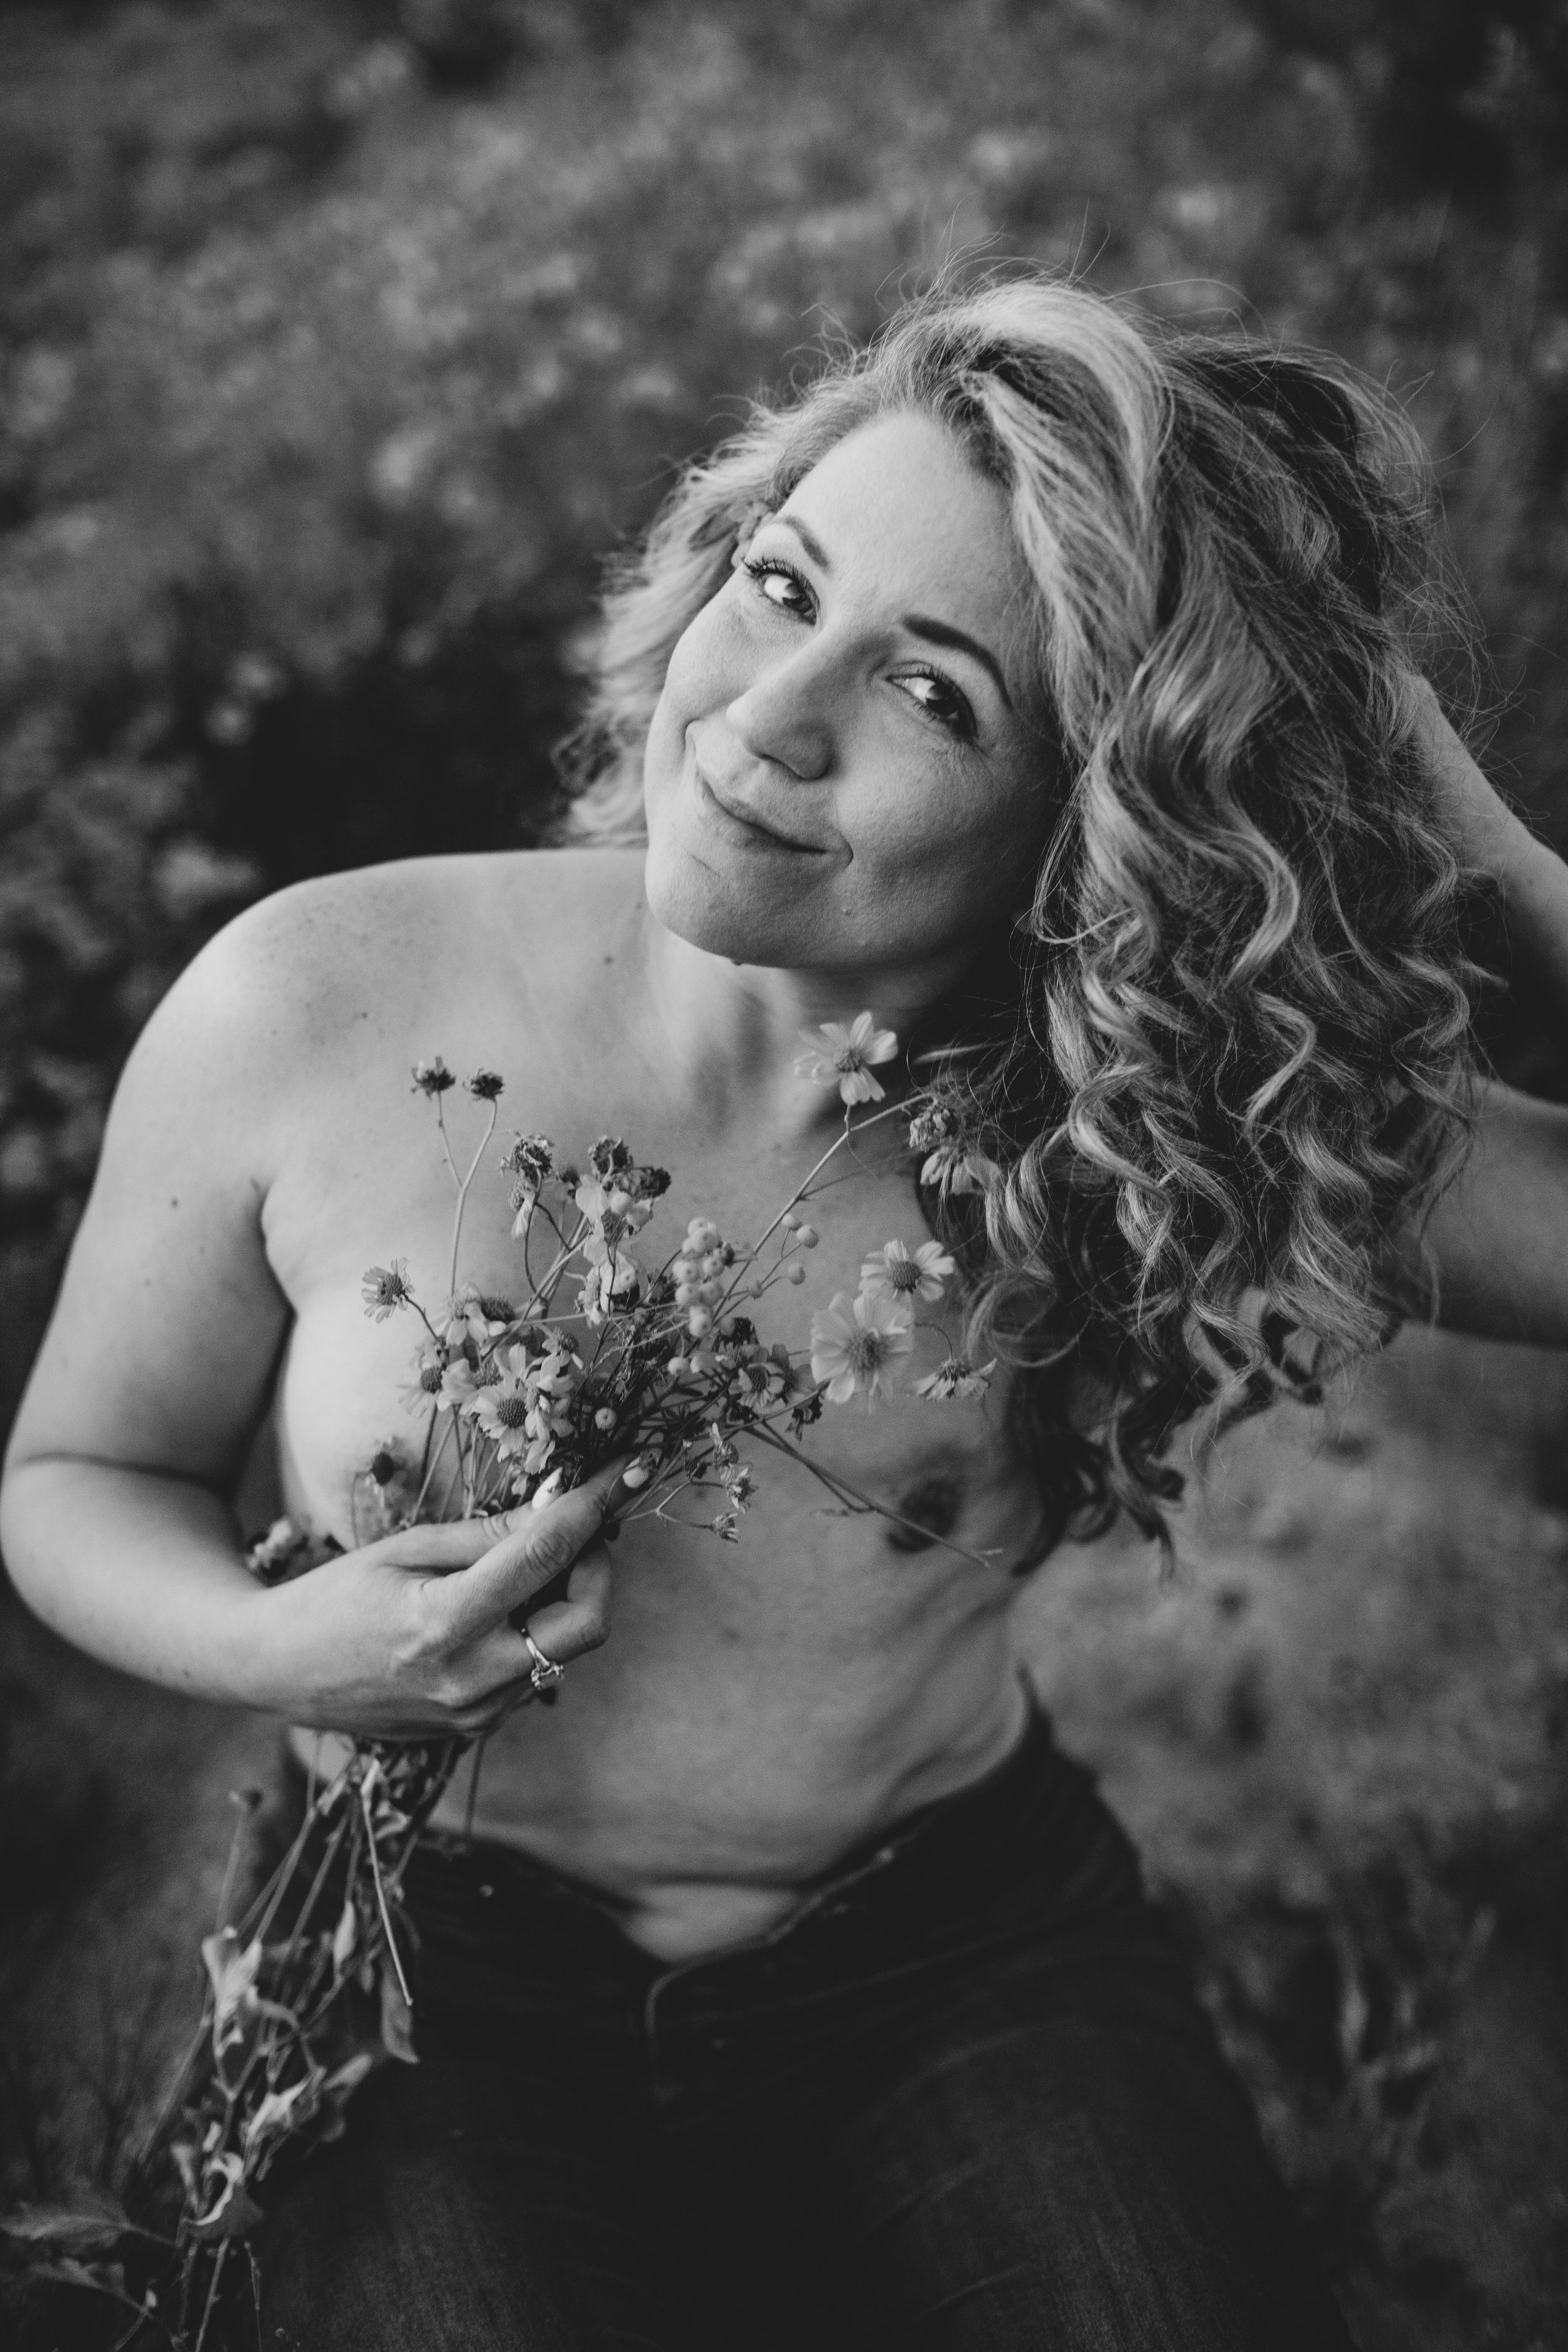 Breast Cancer survivor and thriver poses for wildflower desert boudoir session with Arizona creative boudoir photographer; Jennifer Lind Schutsky.